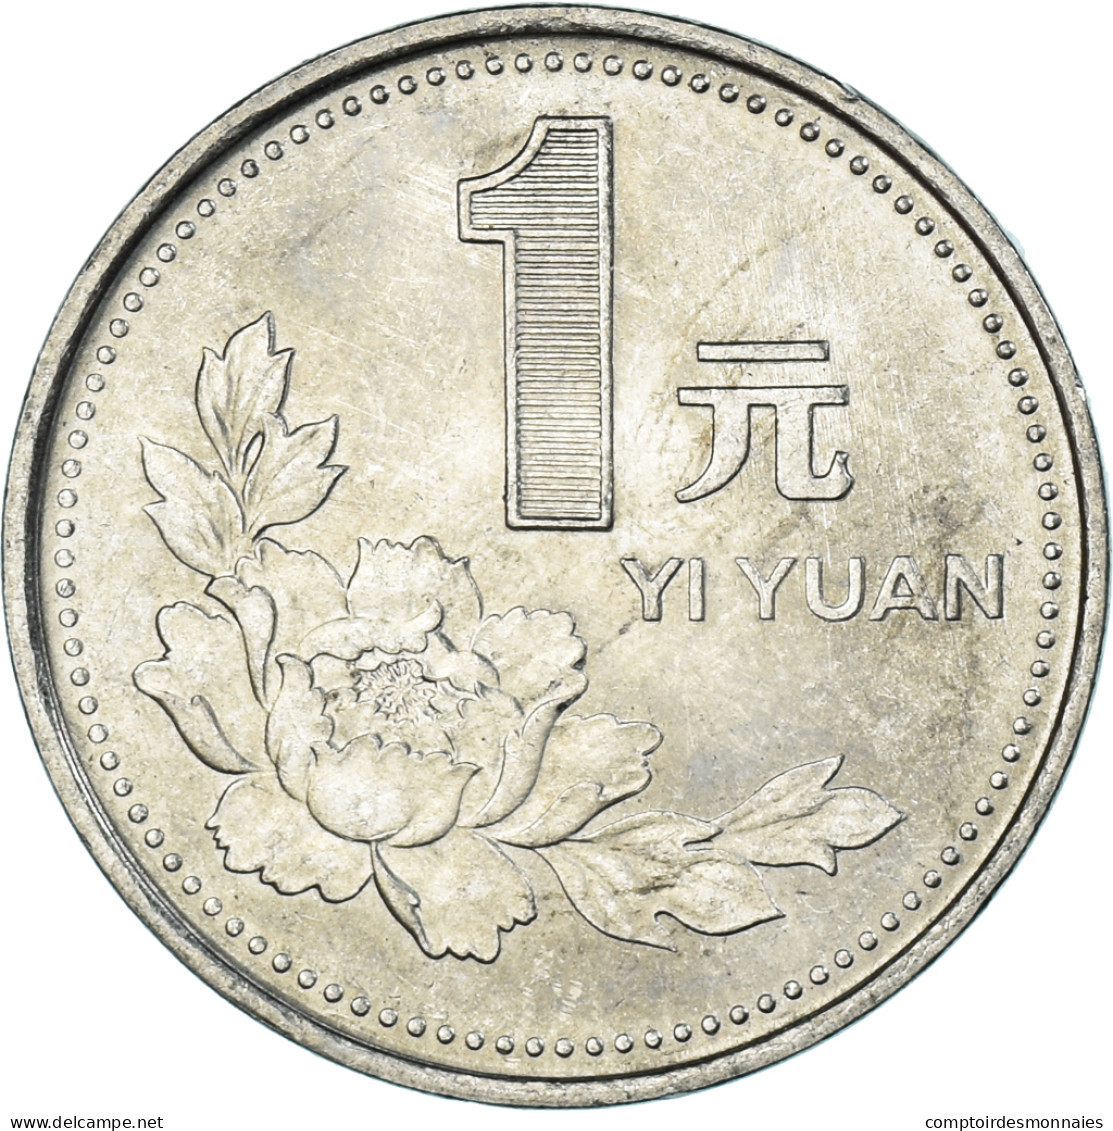 Monnaie, Chine, Yuan, 1992 - China